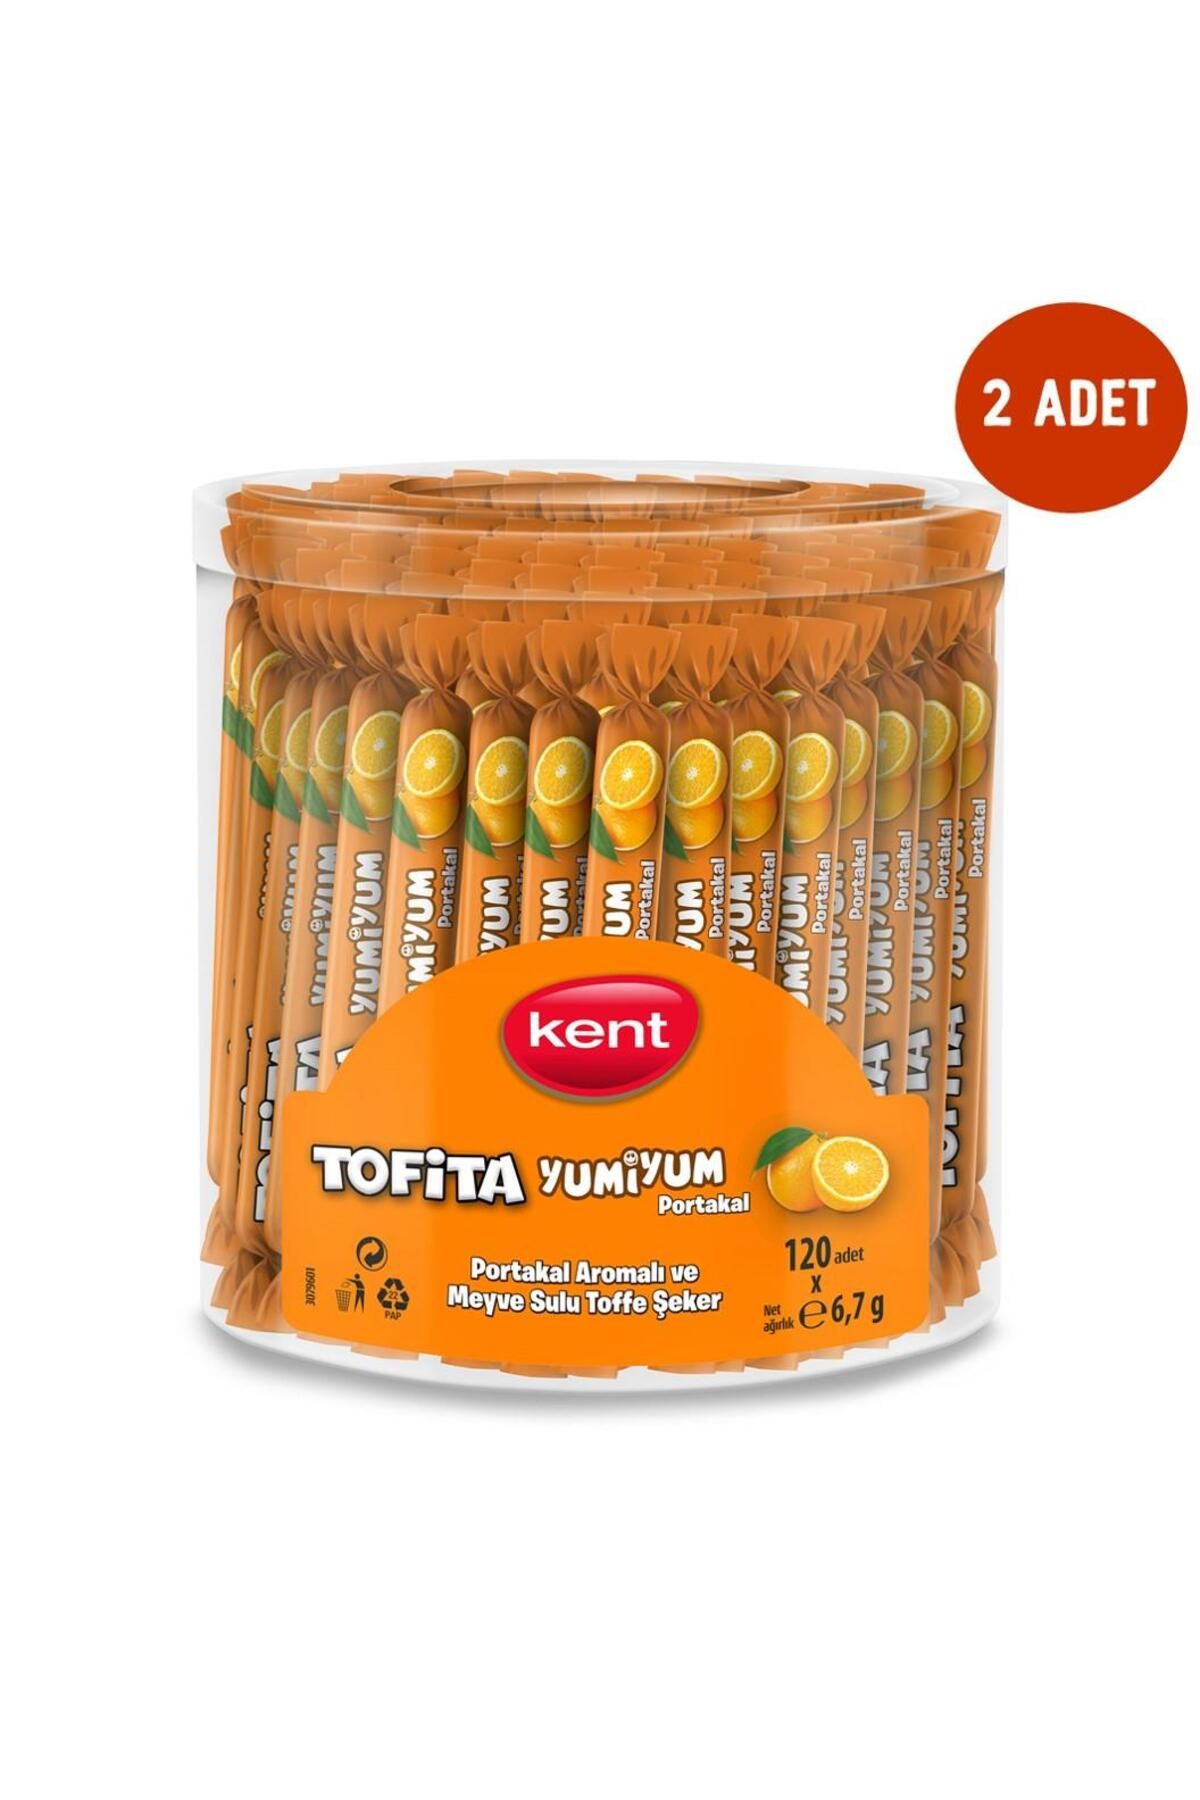 Kent Tofita Yumi Portakal Aromalı Şekerleme 120'li Kavanoz - 2 Adet